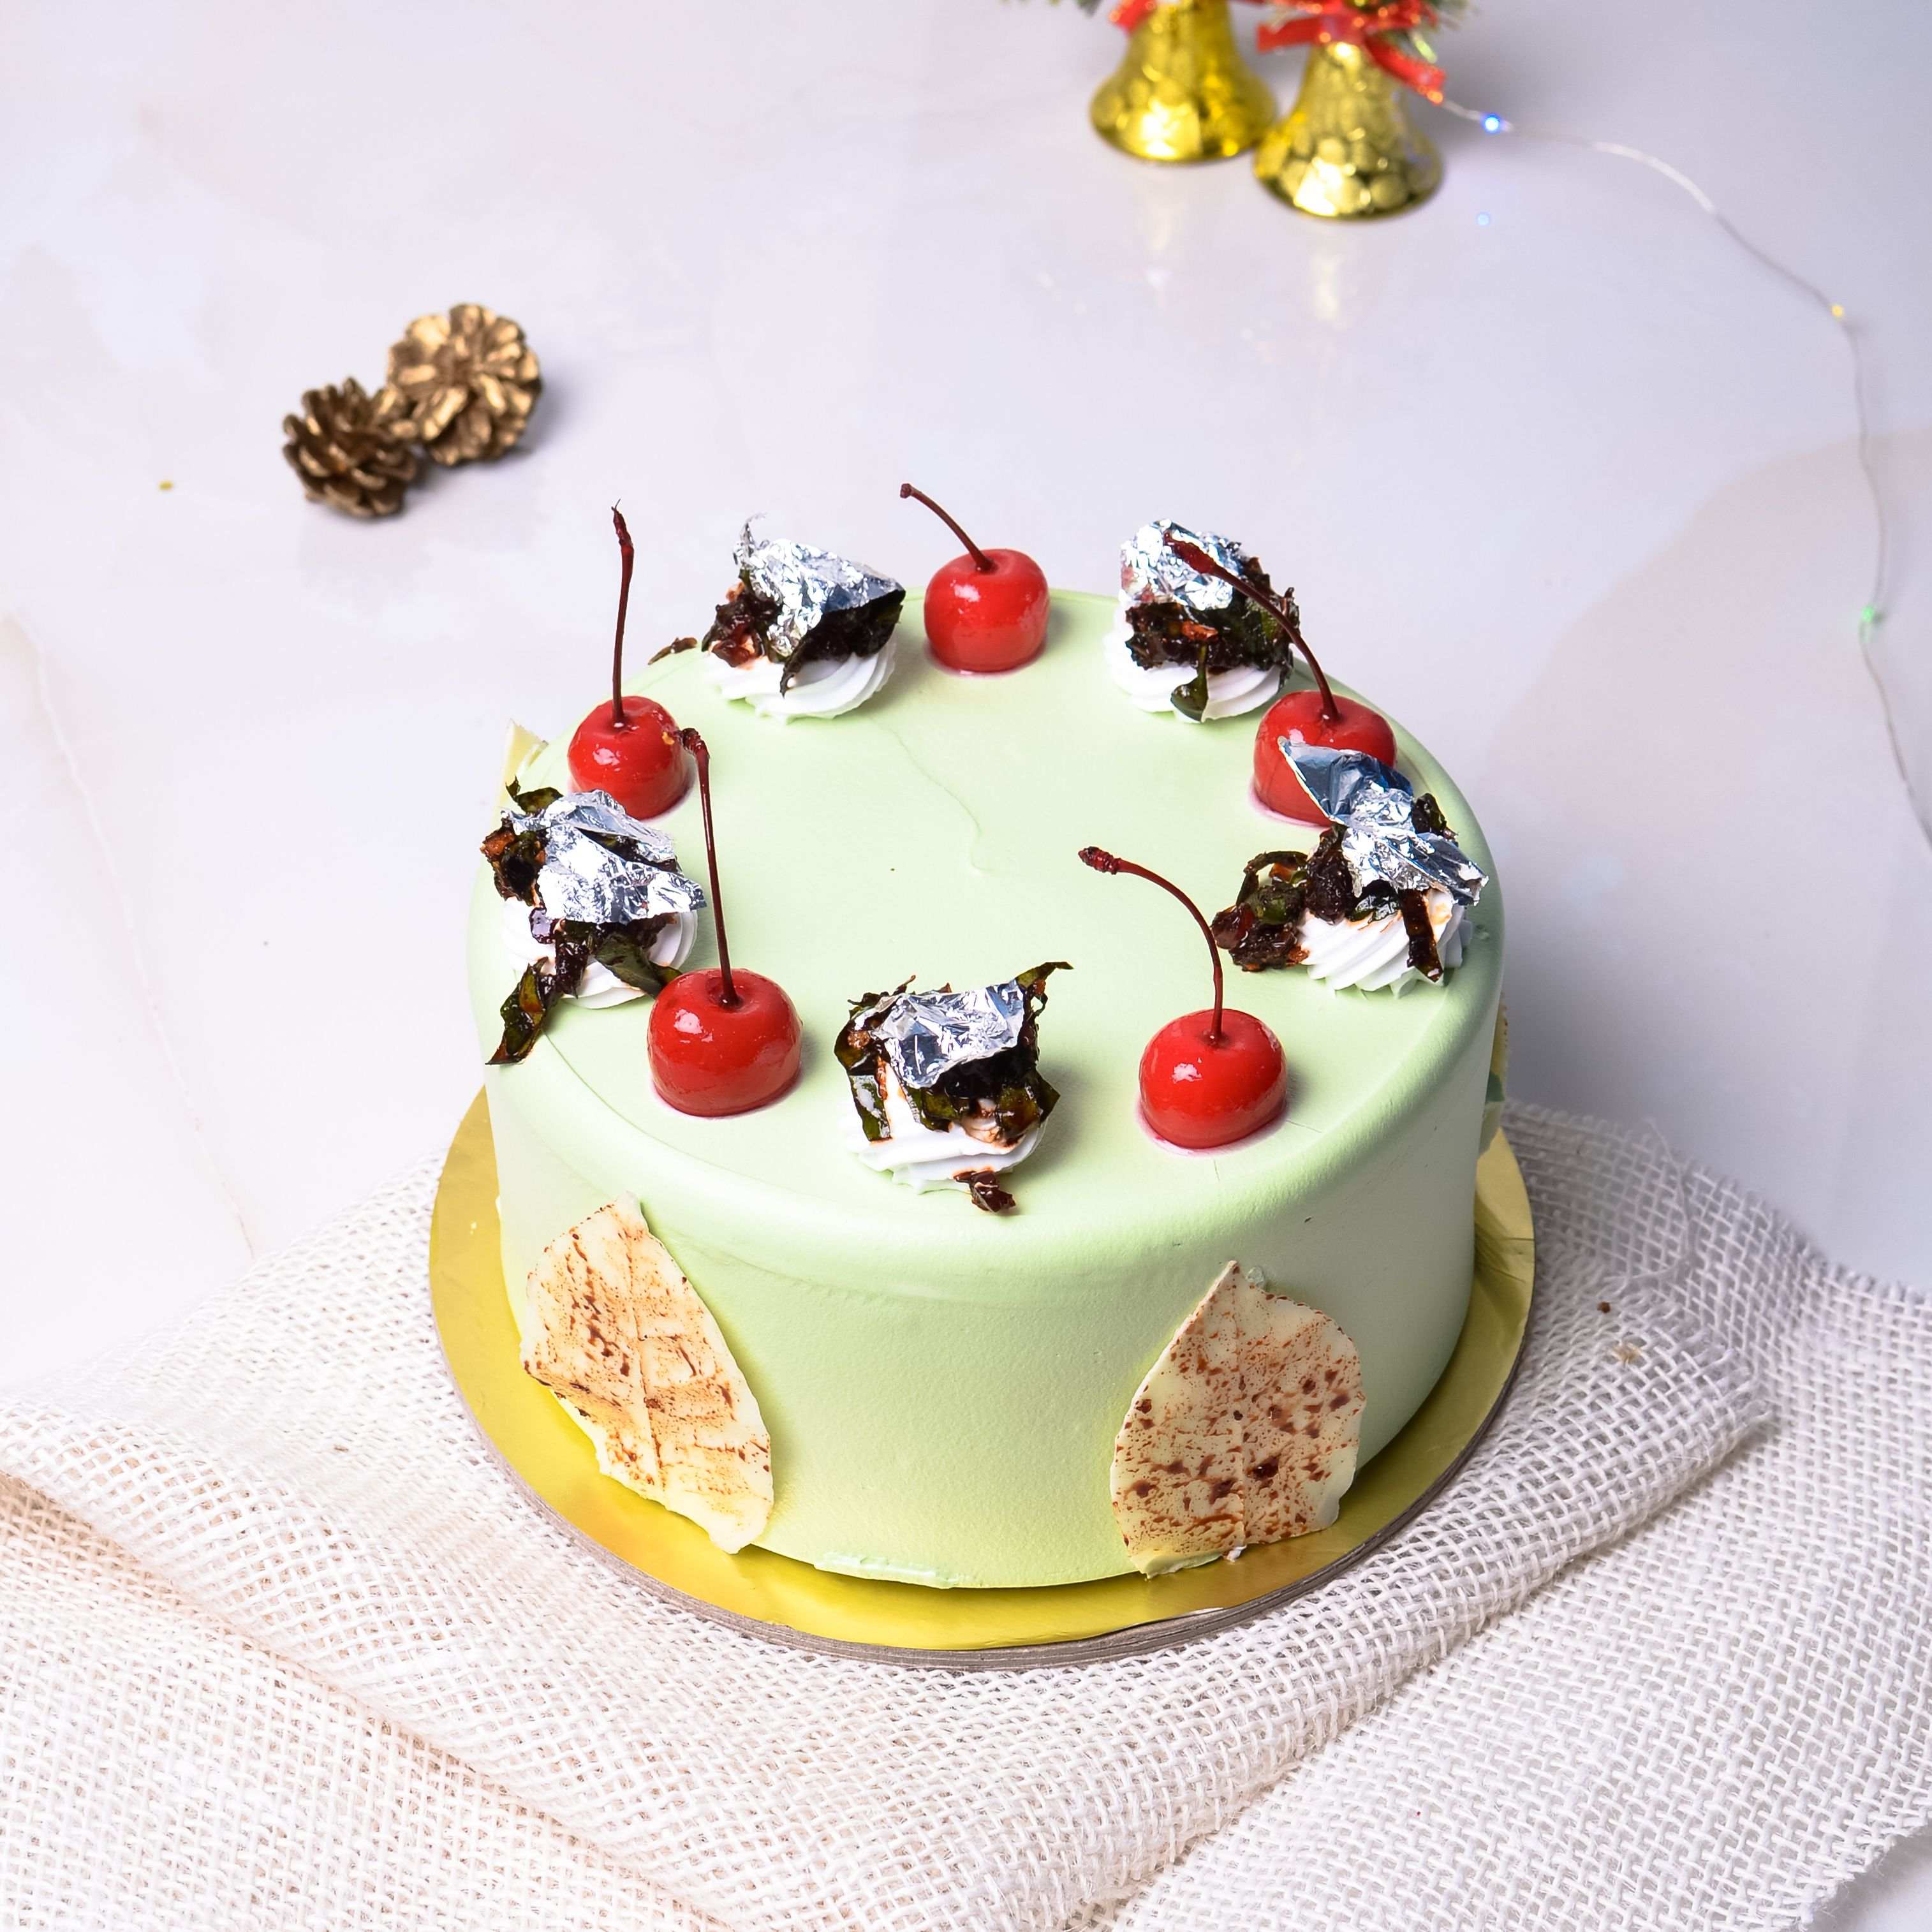 Order Unicorn Cake Online From Passionbakery n chocos,mumbai